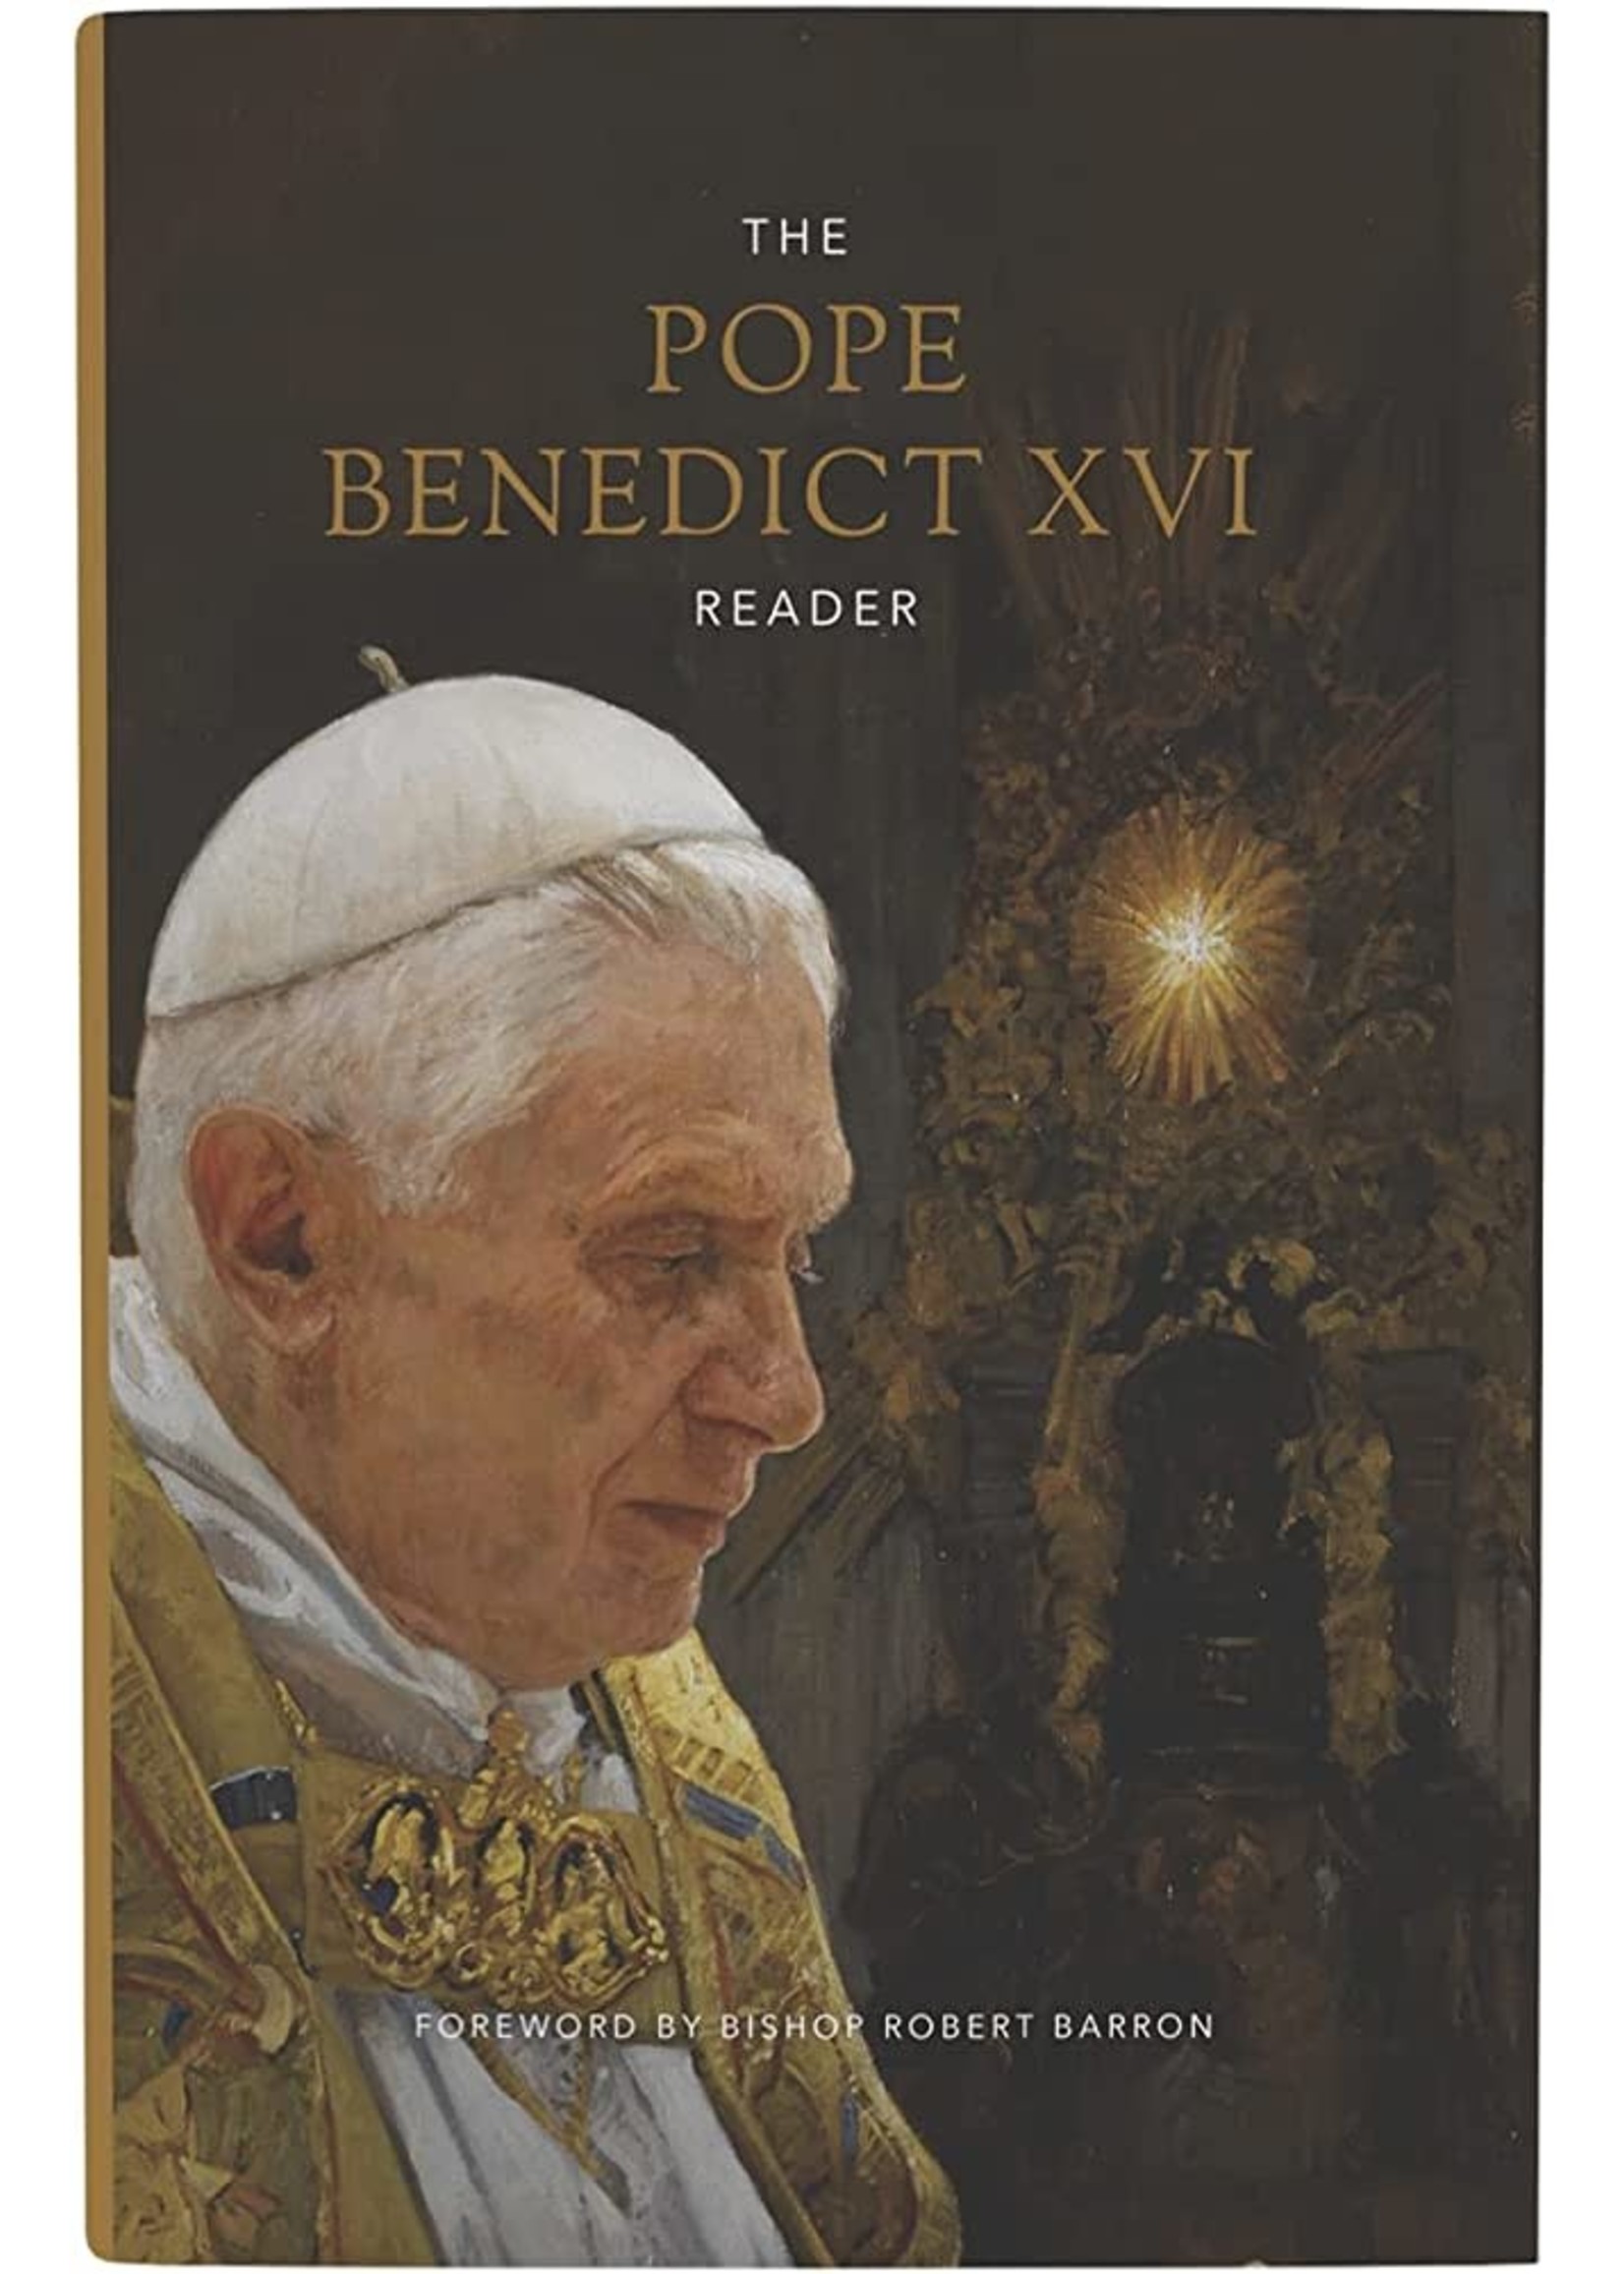 The Pope Benedict XVI Reader